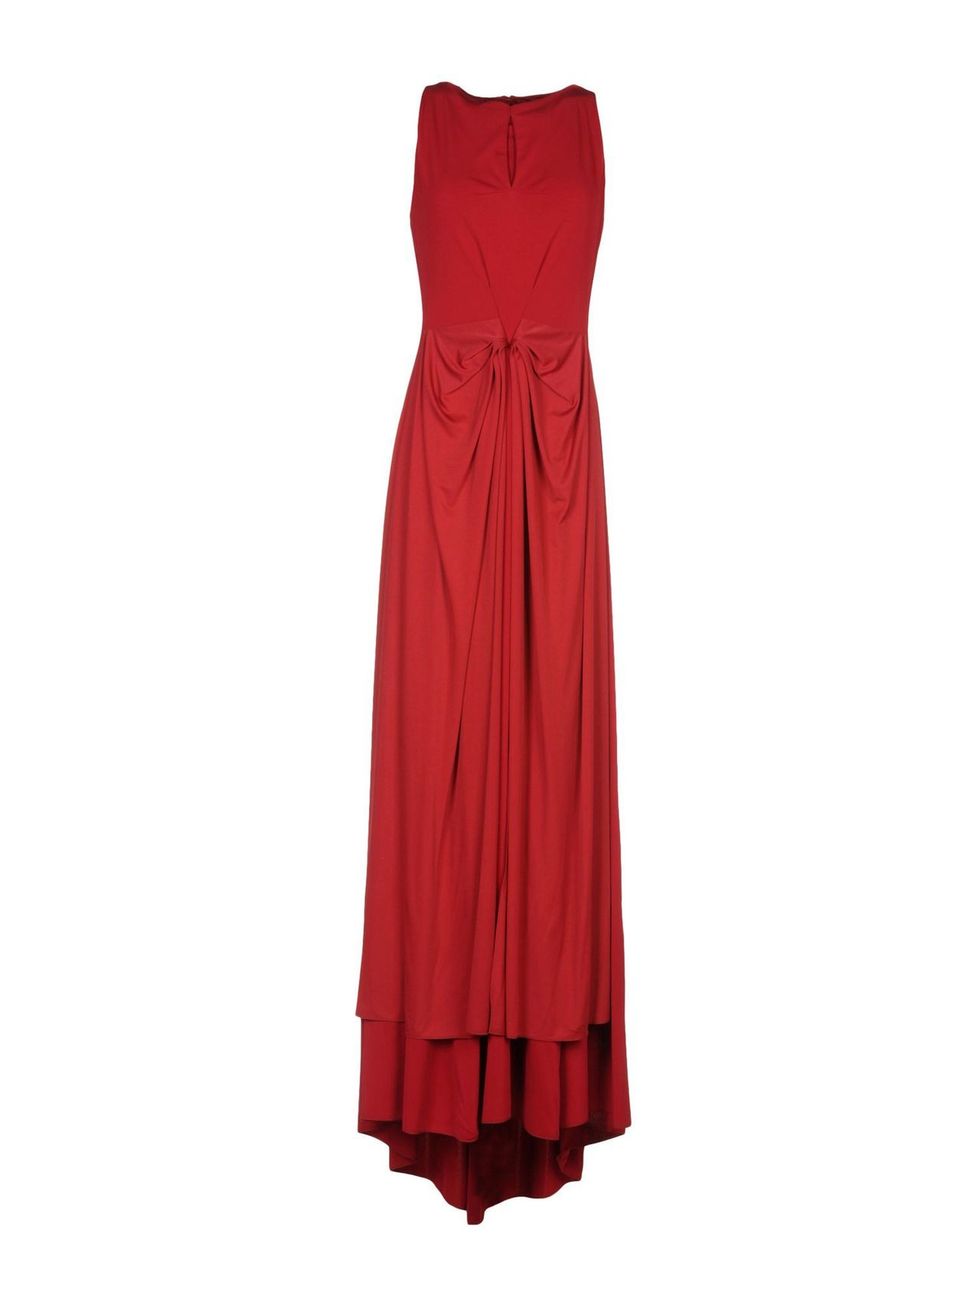 Sleeve, Dress, Textile, Red, One-piece garment, Formal wear, Pattern, Carmine, Neck, Day dress, 